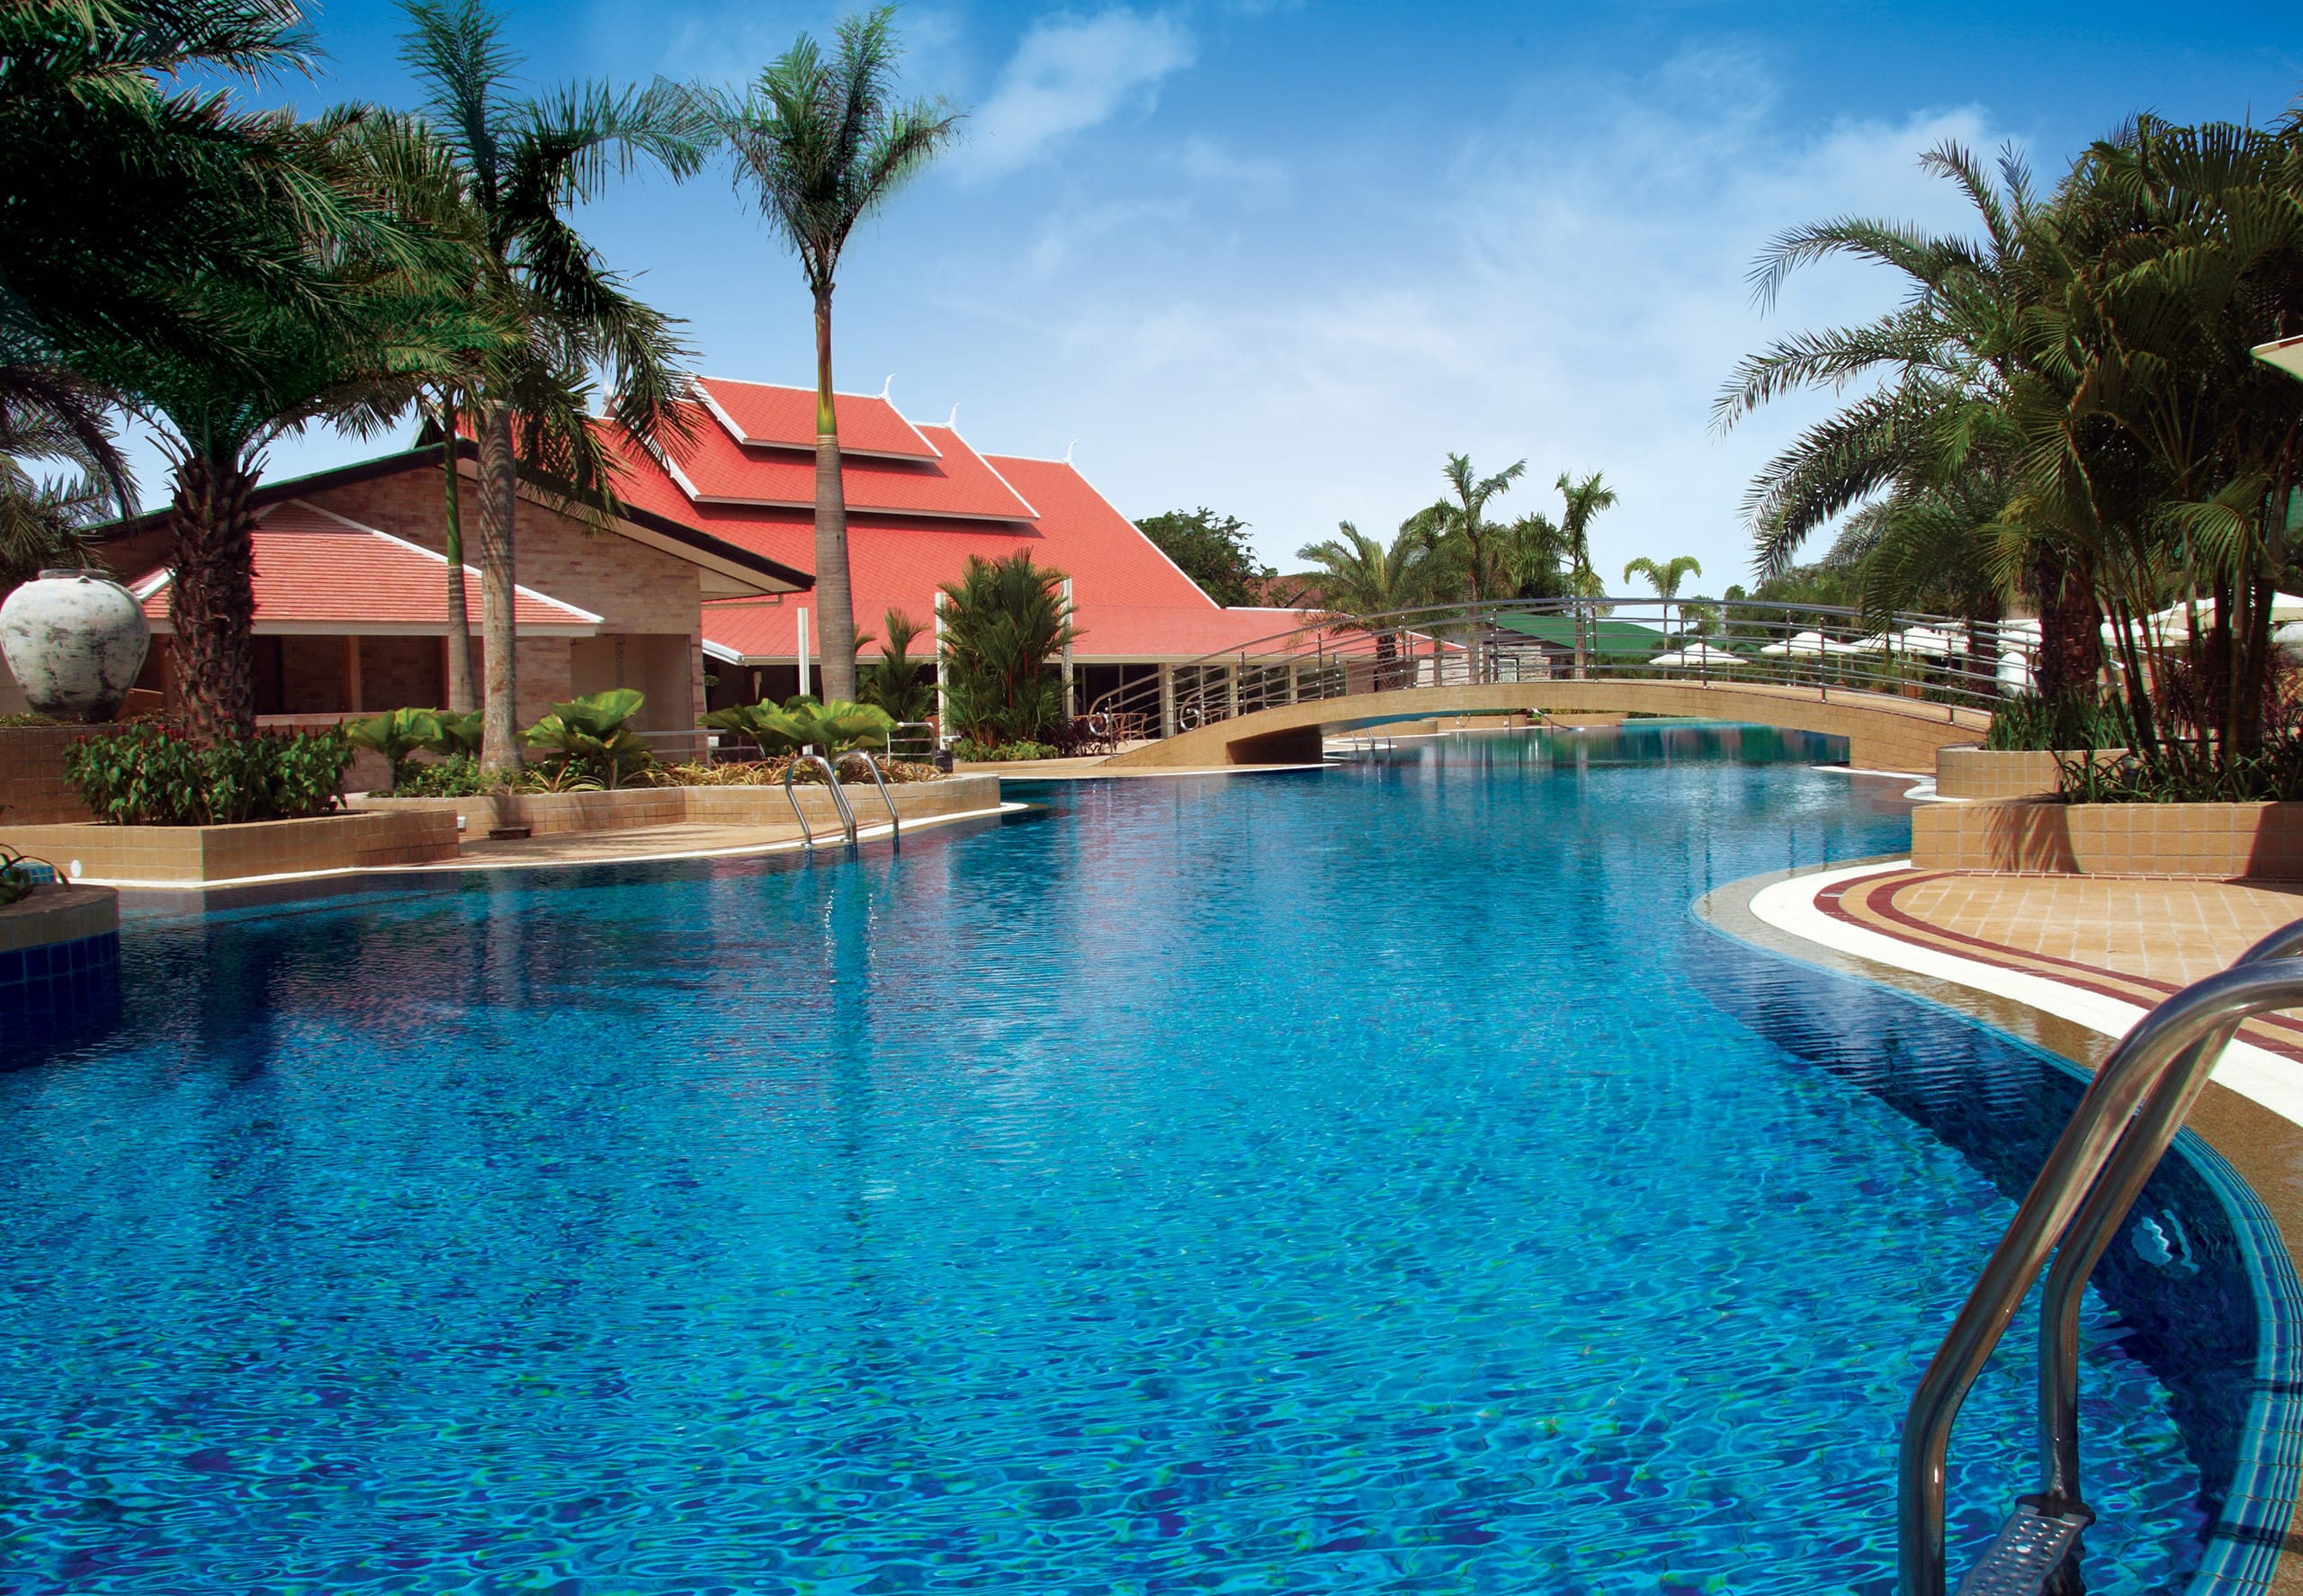 27/28-daagse Strandvakantie Thai Garden Resort / Pattaya